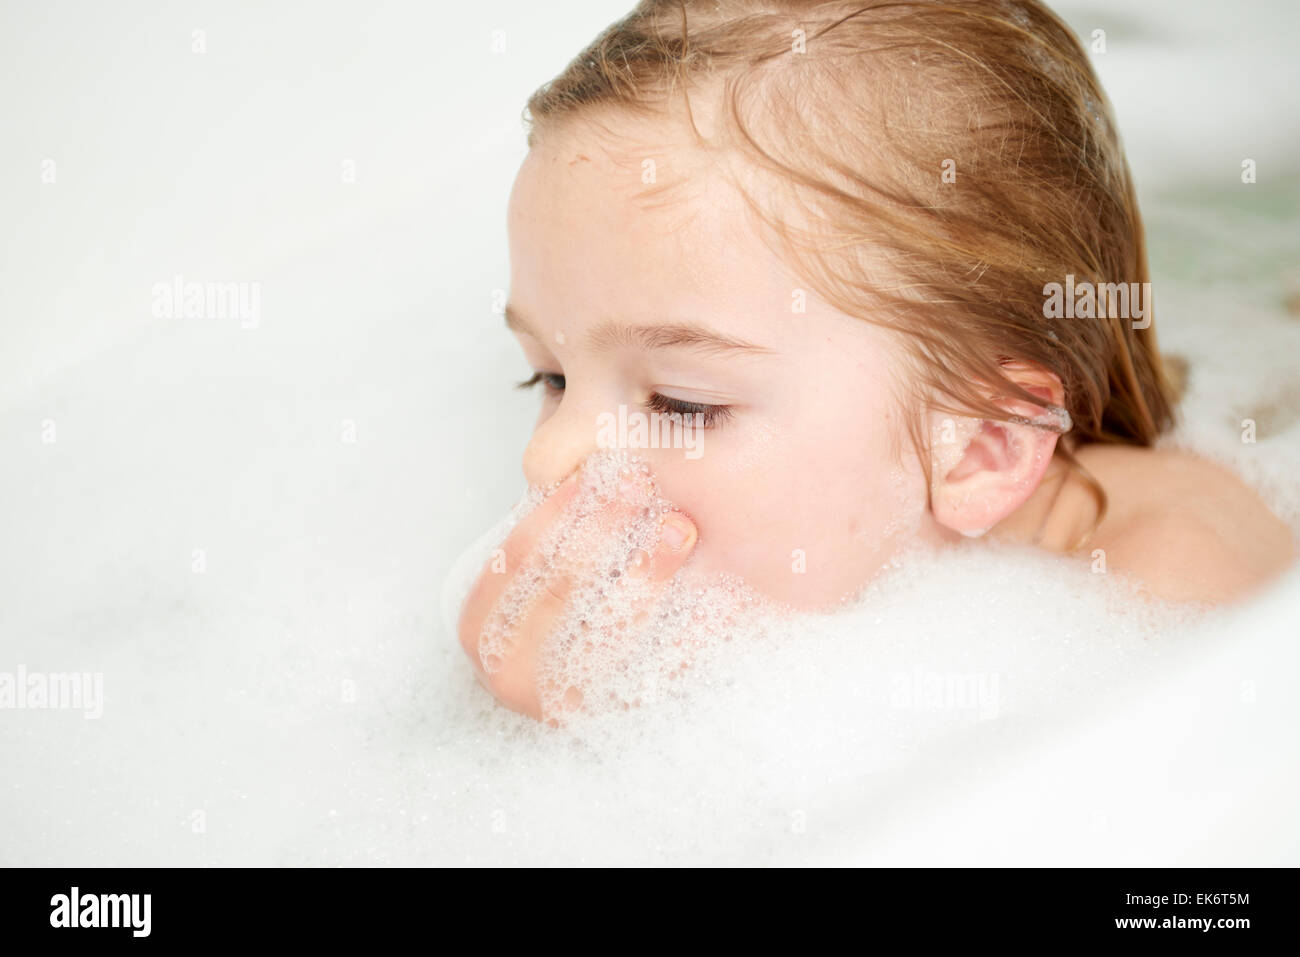 Smiling Child Girl in Bathtub Stock Photo - Alamy